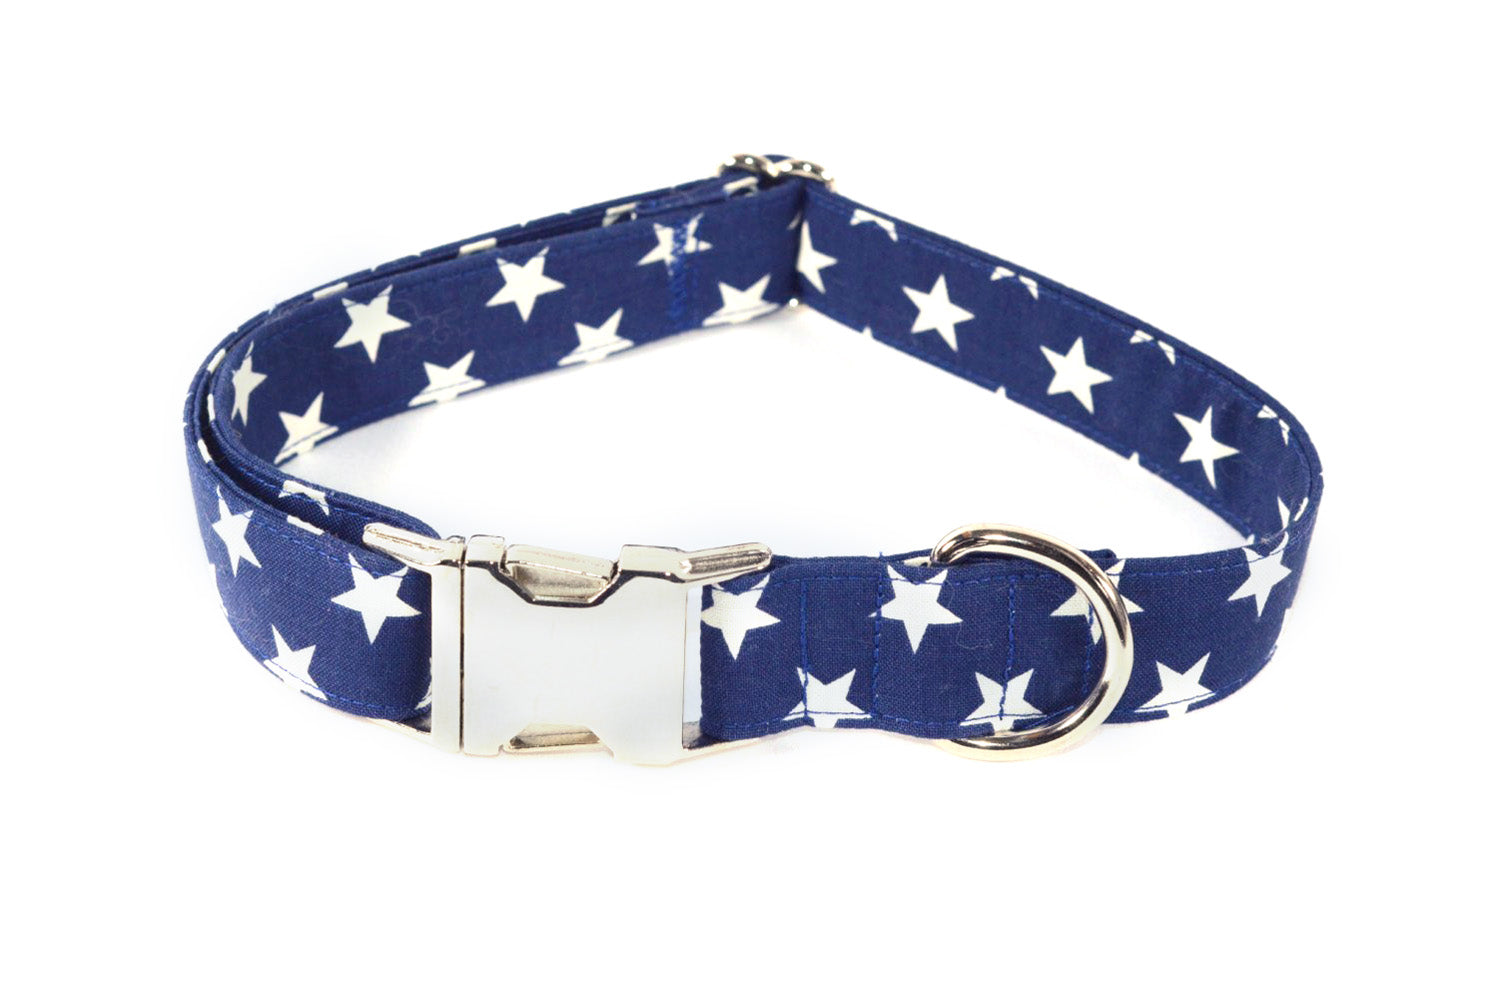 Large Stars on Navy Adjustable Dog Collar - Fox Valley Pet Wear